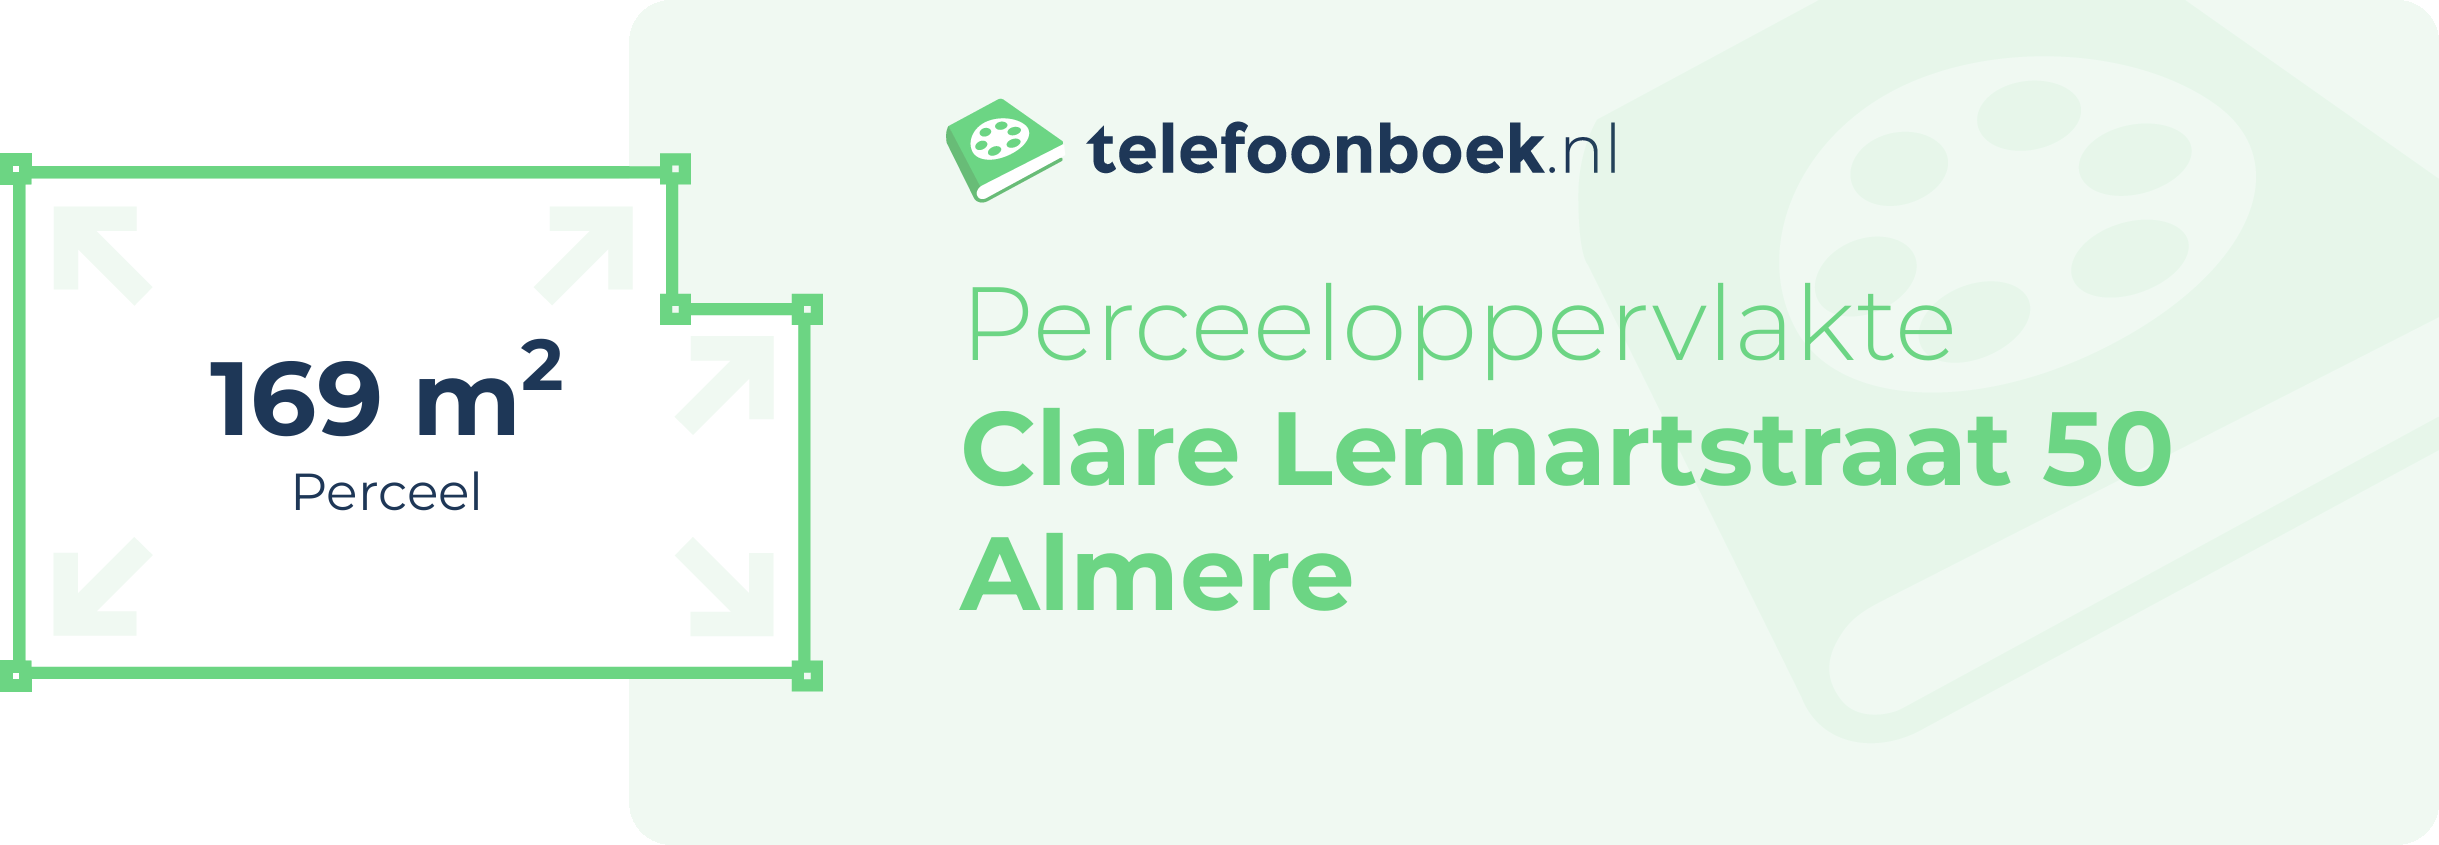 Perceeloppervlakte Clare Lennartstraat 50 Almere